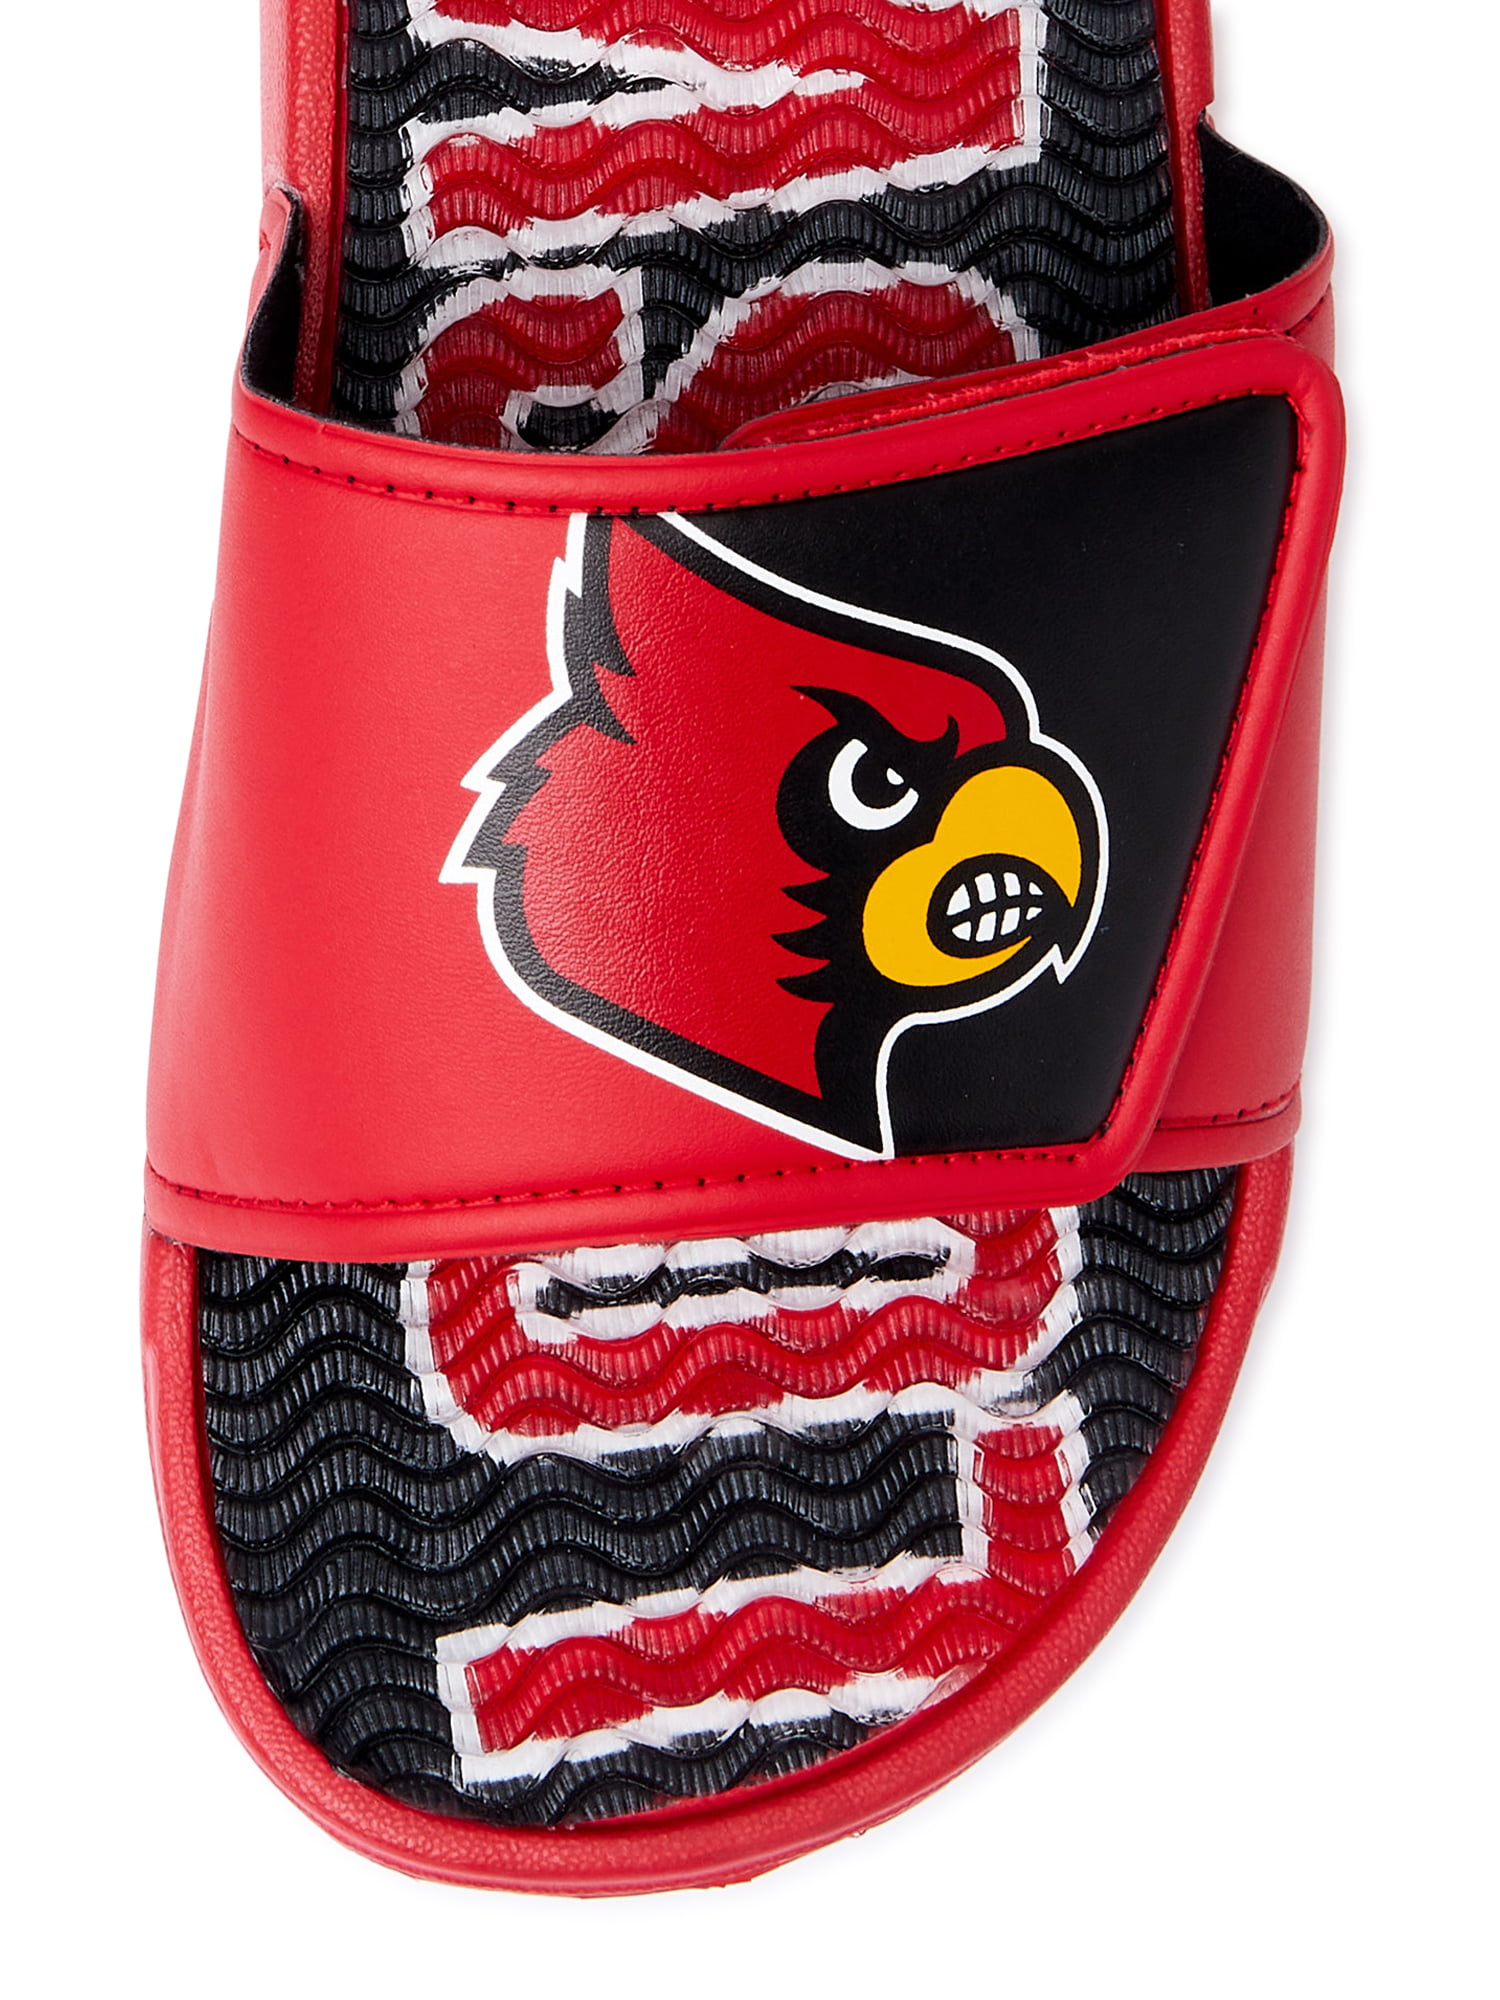 New Foco U of L Cardinals Santa Hat & Men's L Slides Sz 11-12 Red  Free Shipping